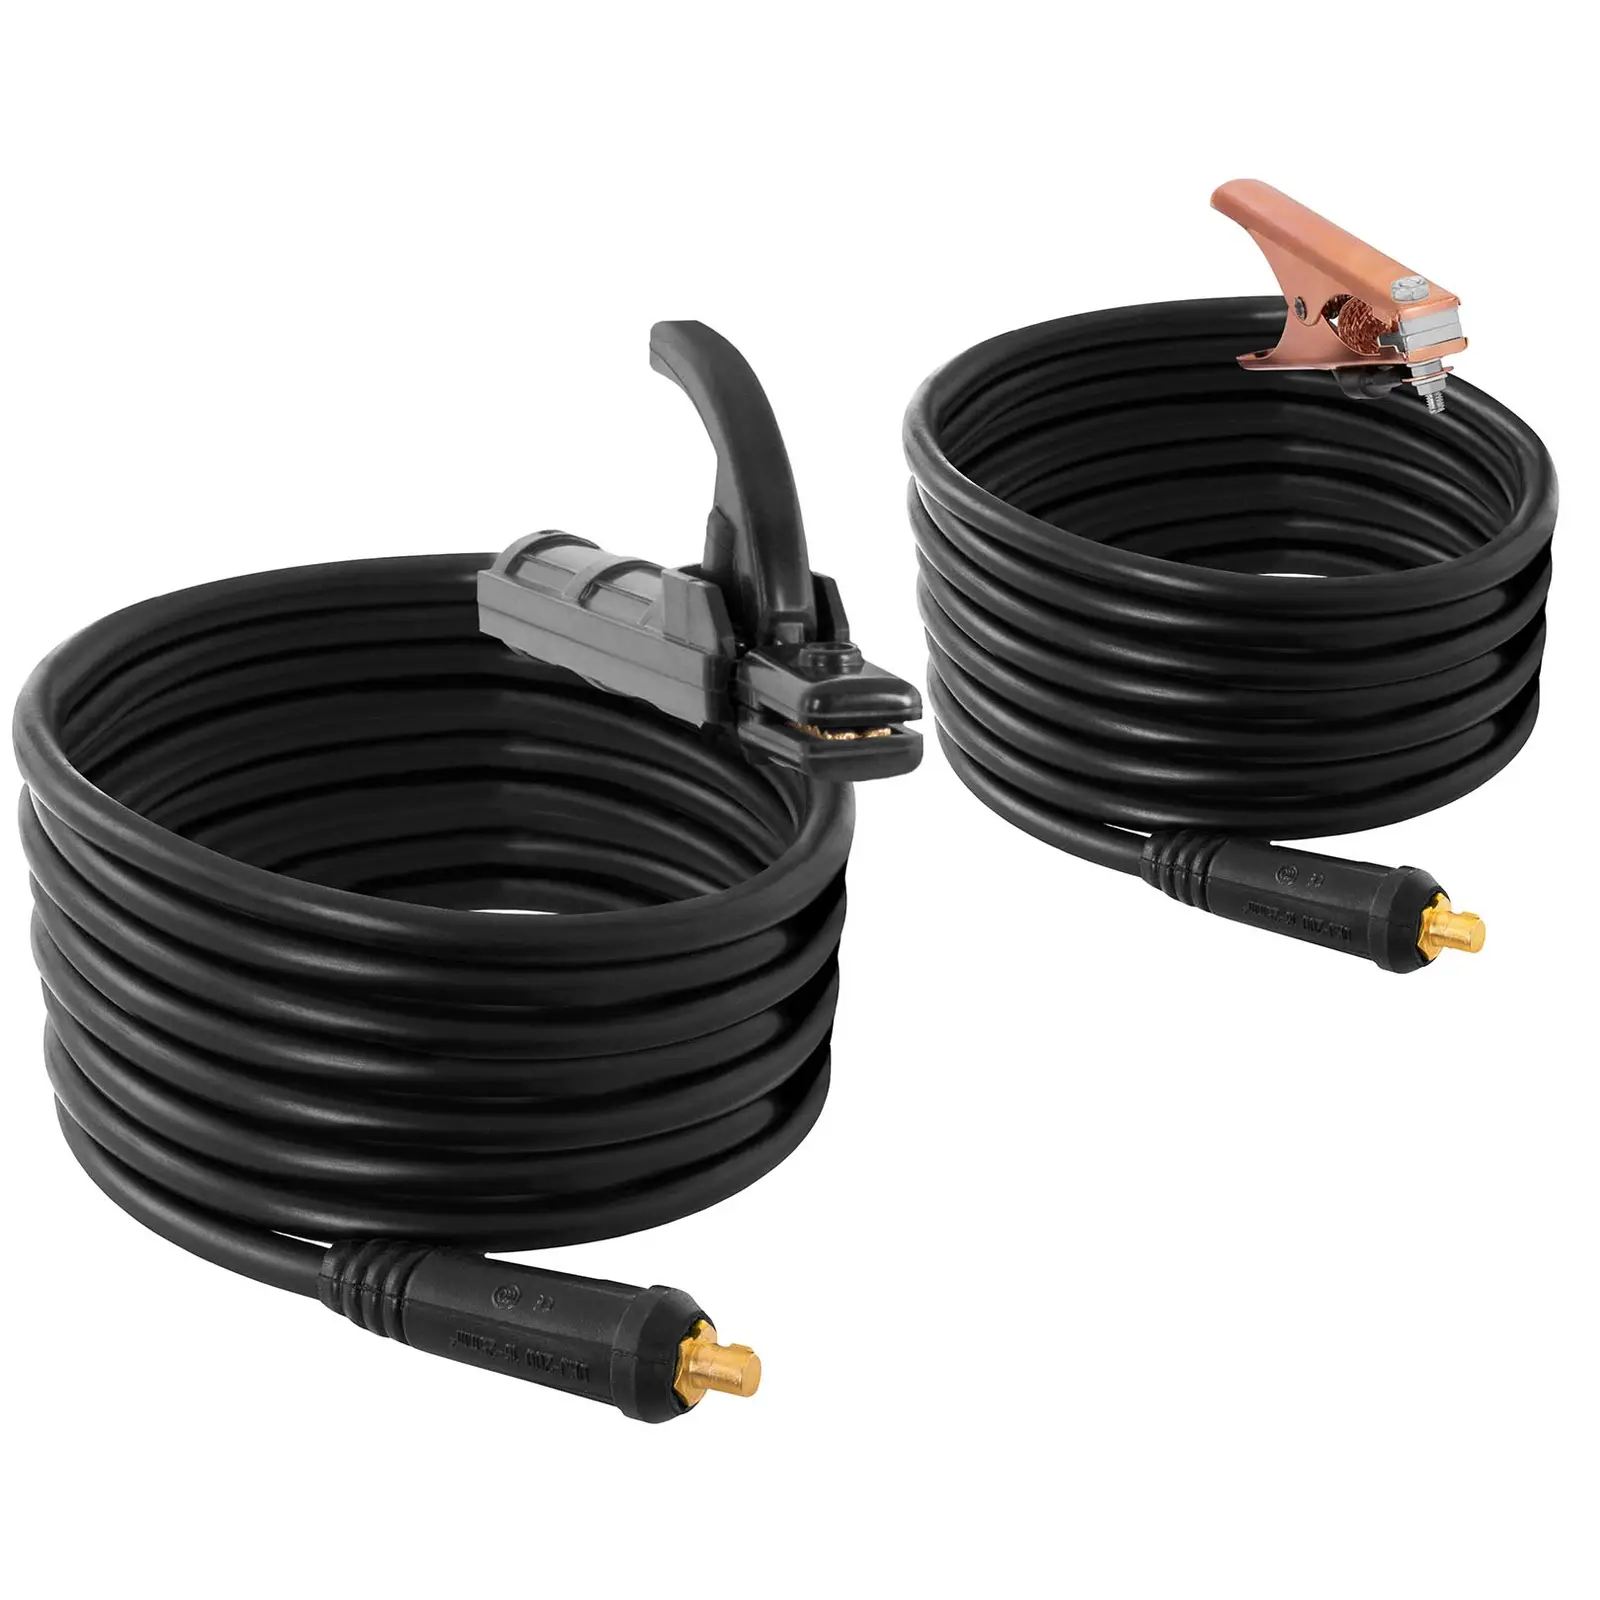 Equipo de soldadura por electrodo MMA - 250 A - cables de 8 m - Hot Start - PRO